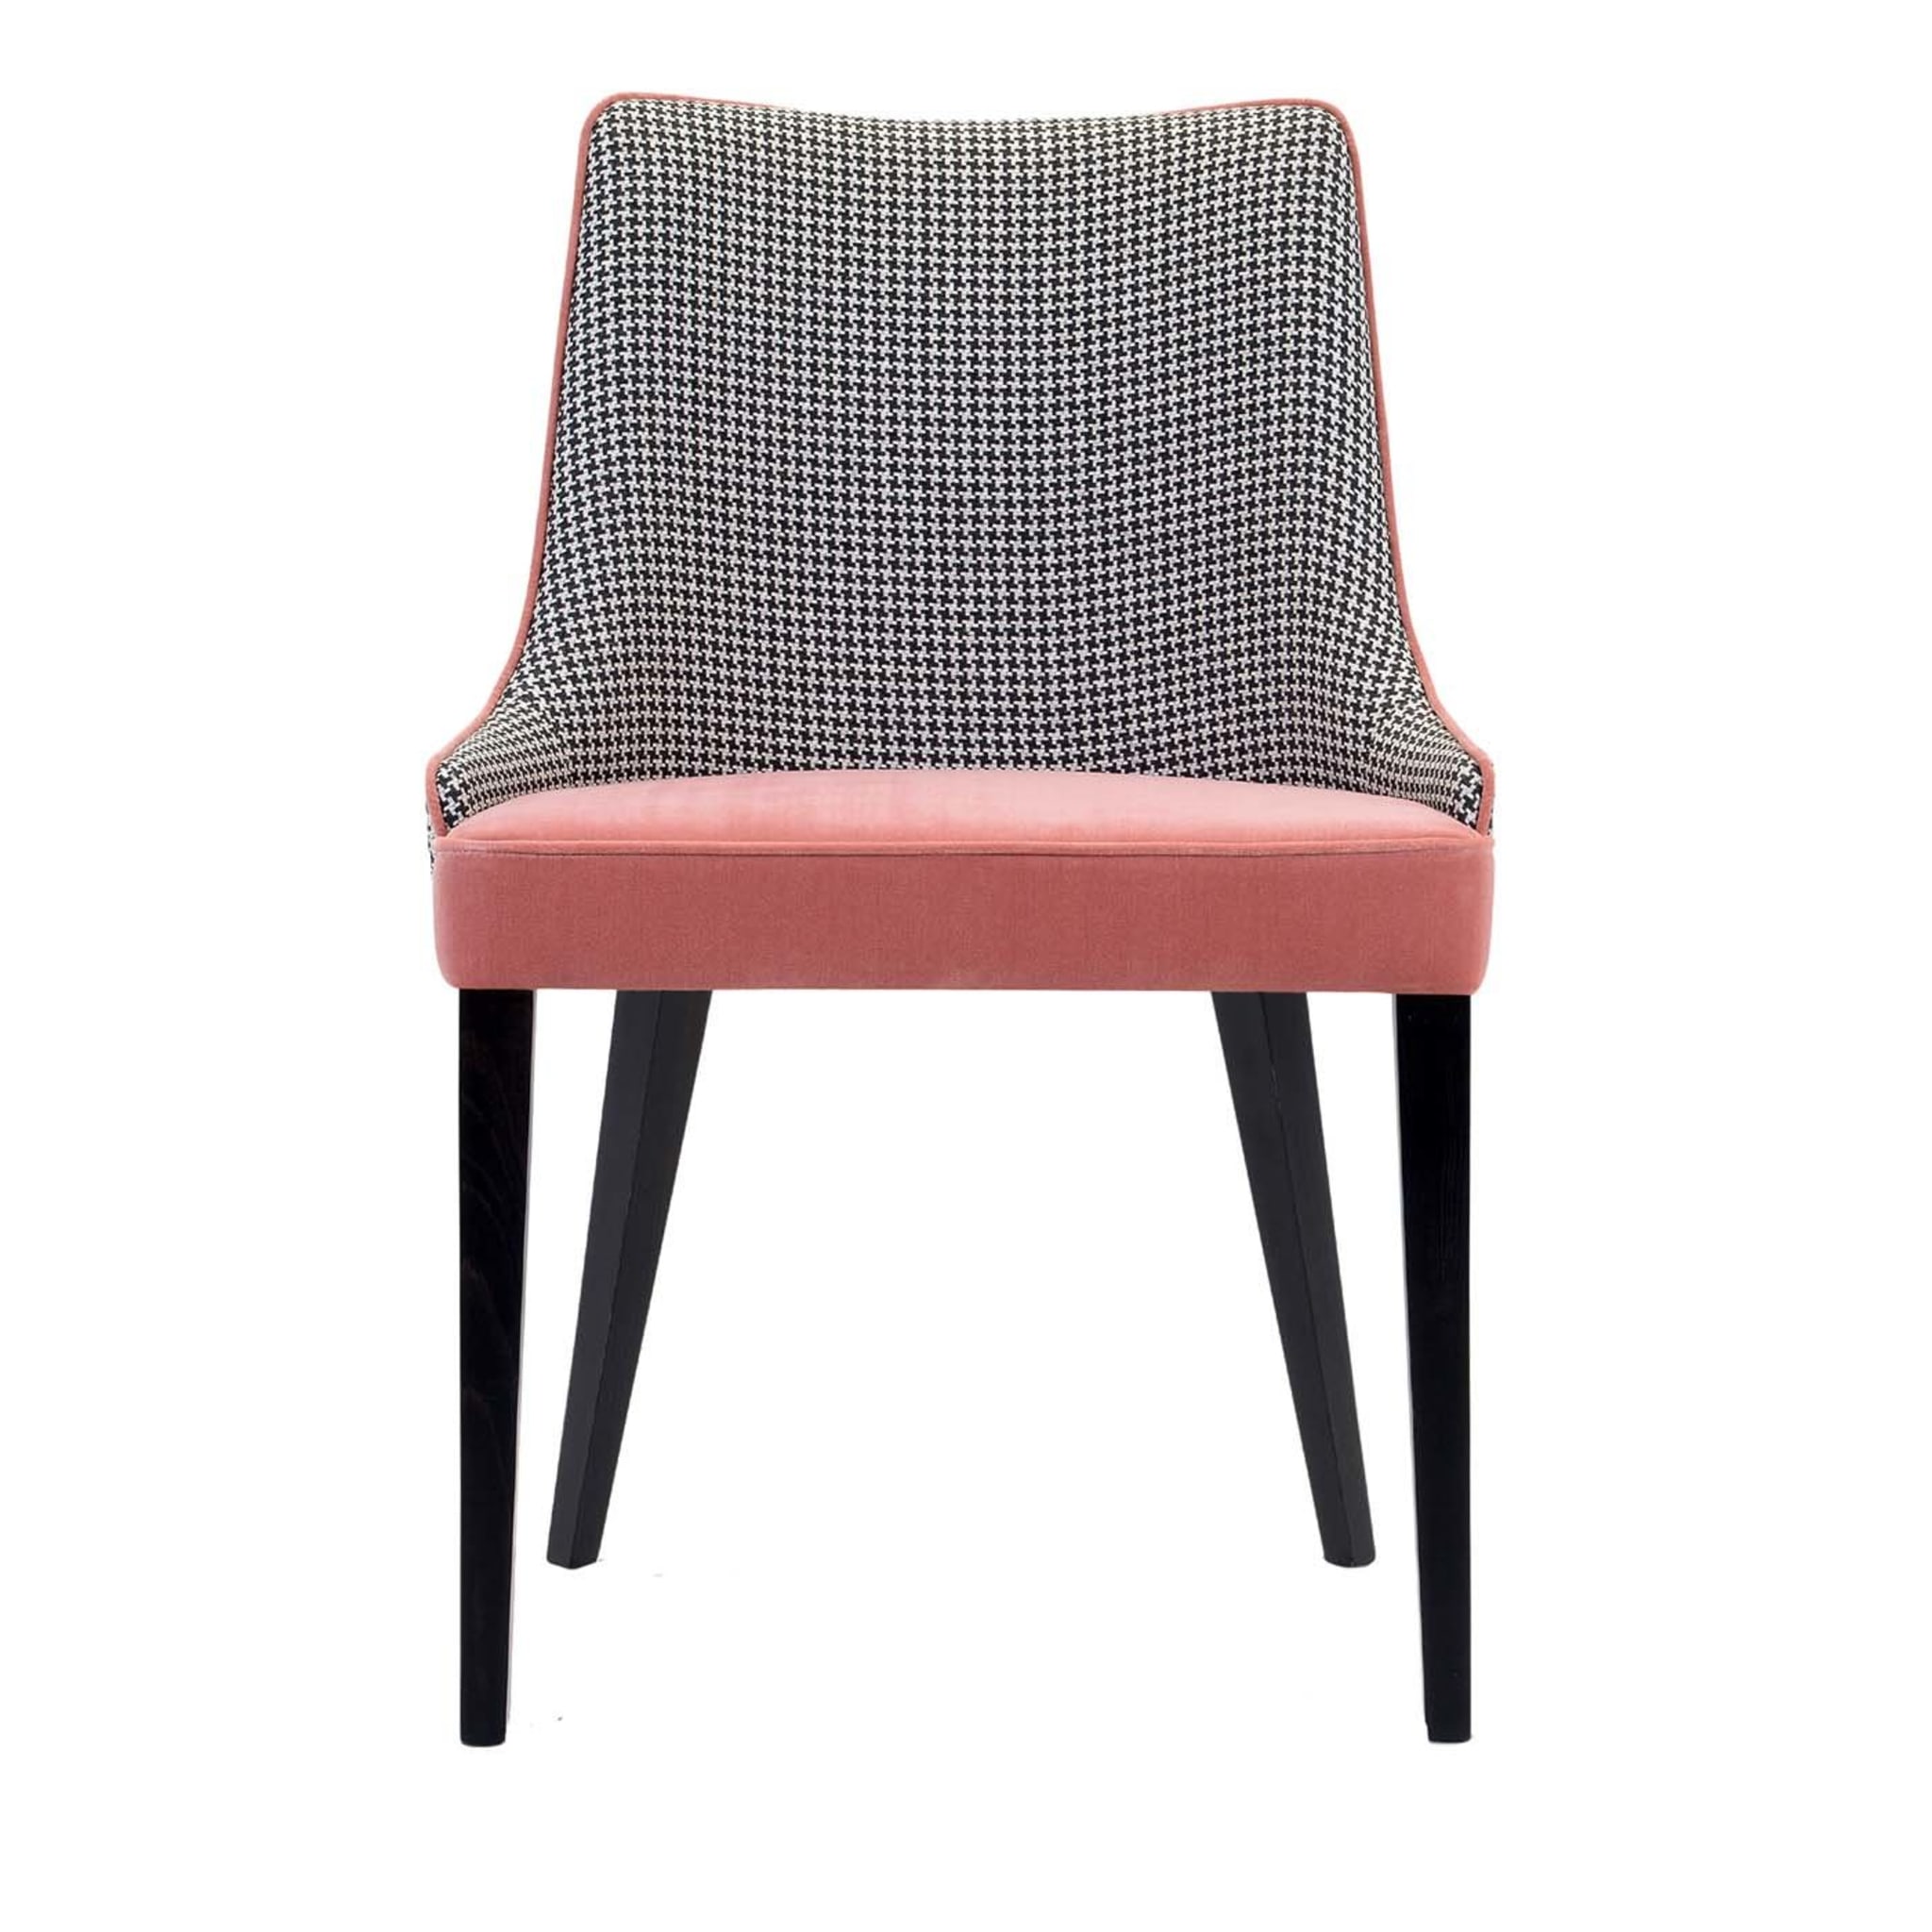 Pat Pink/Gray Chair - Main view